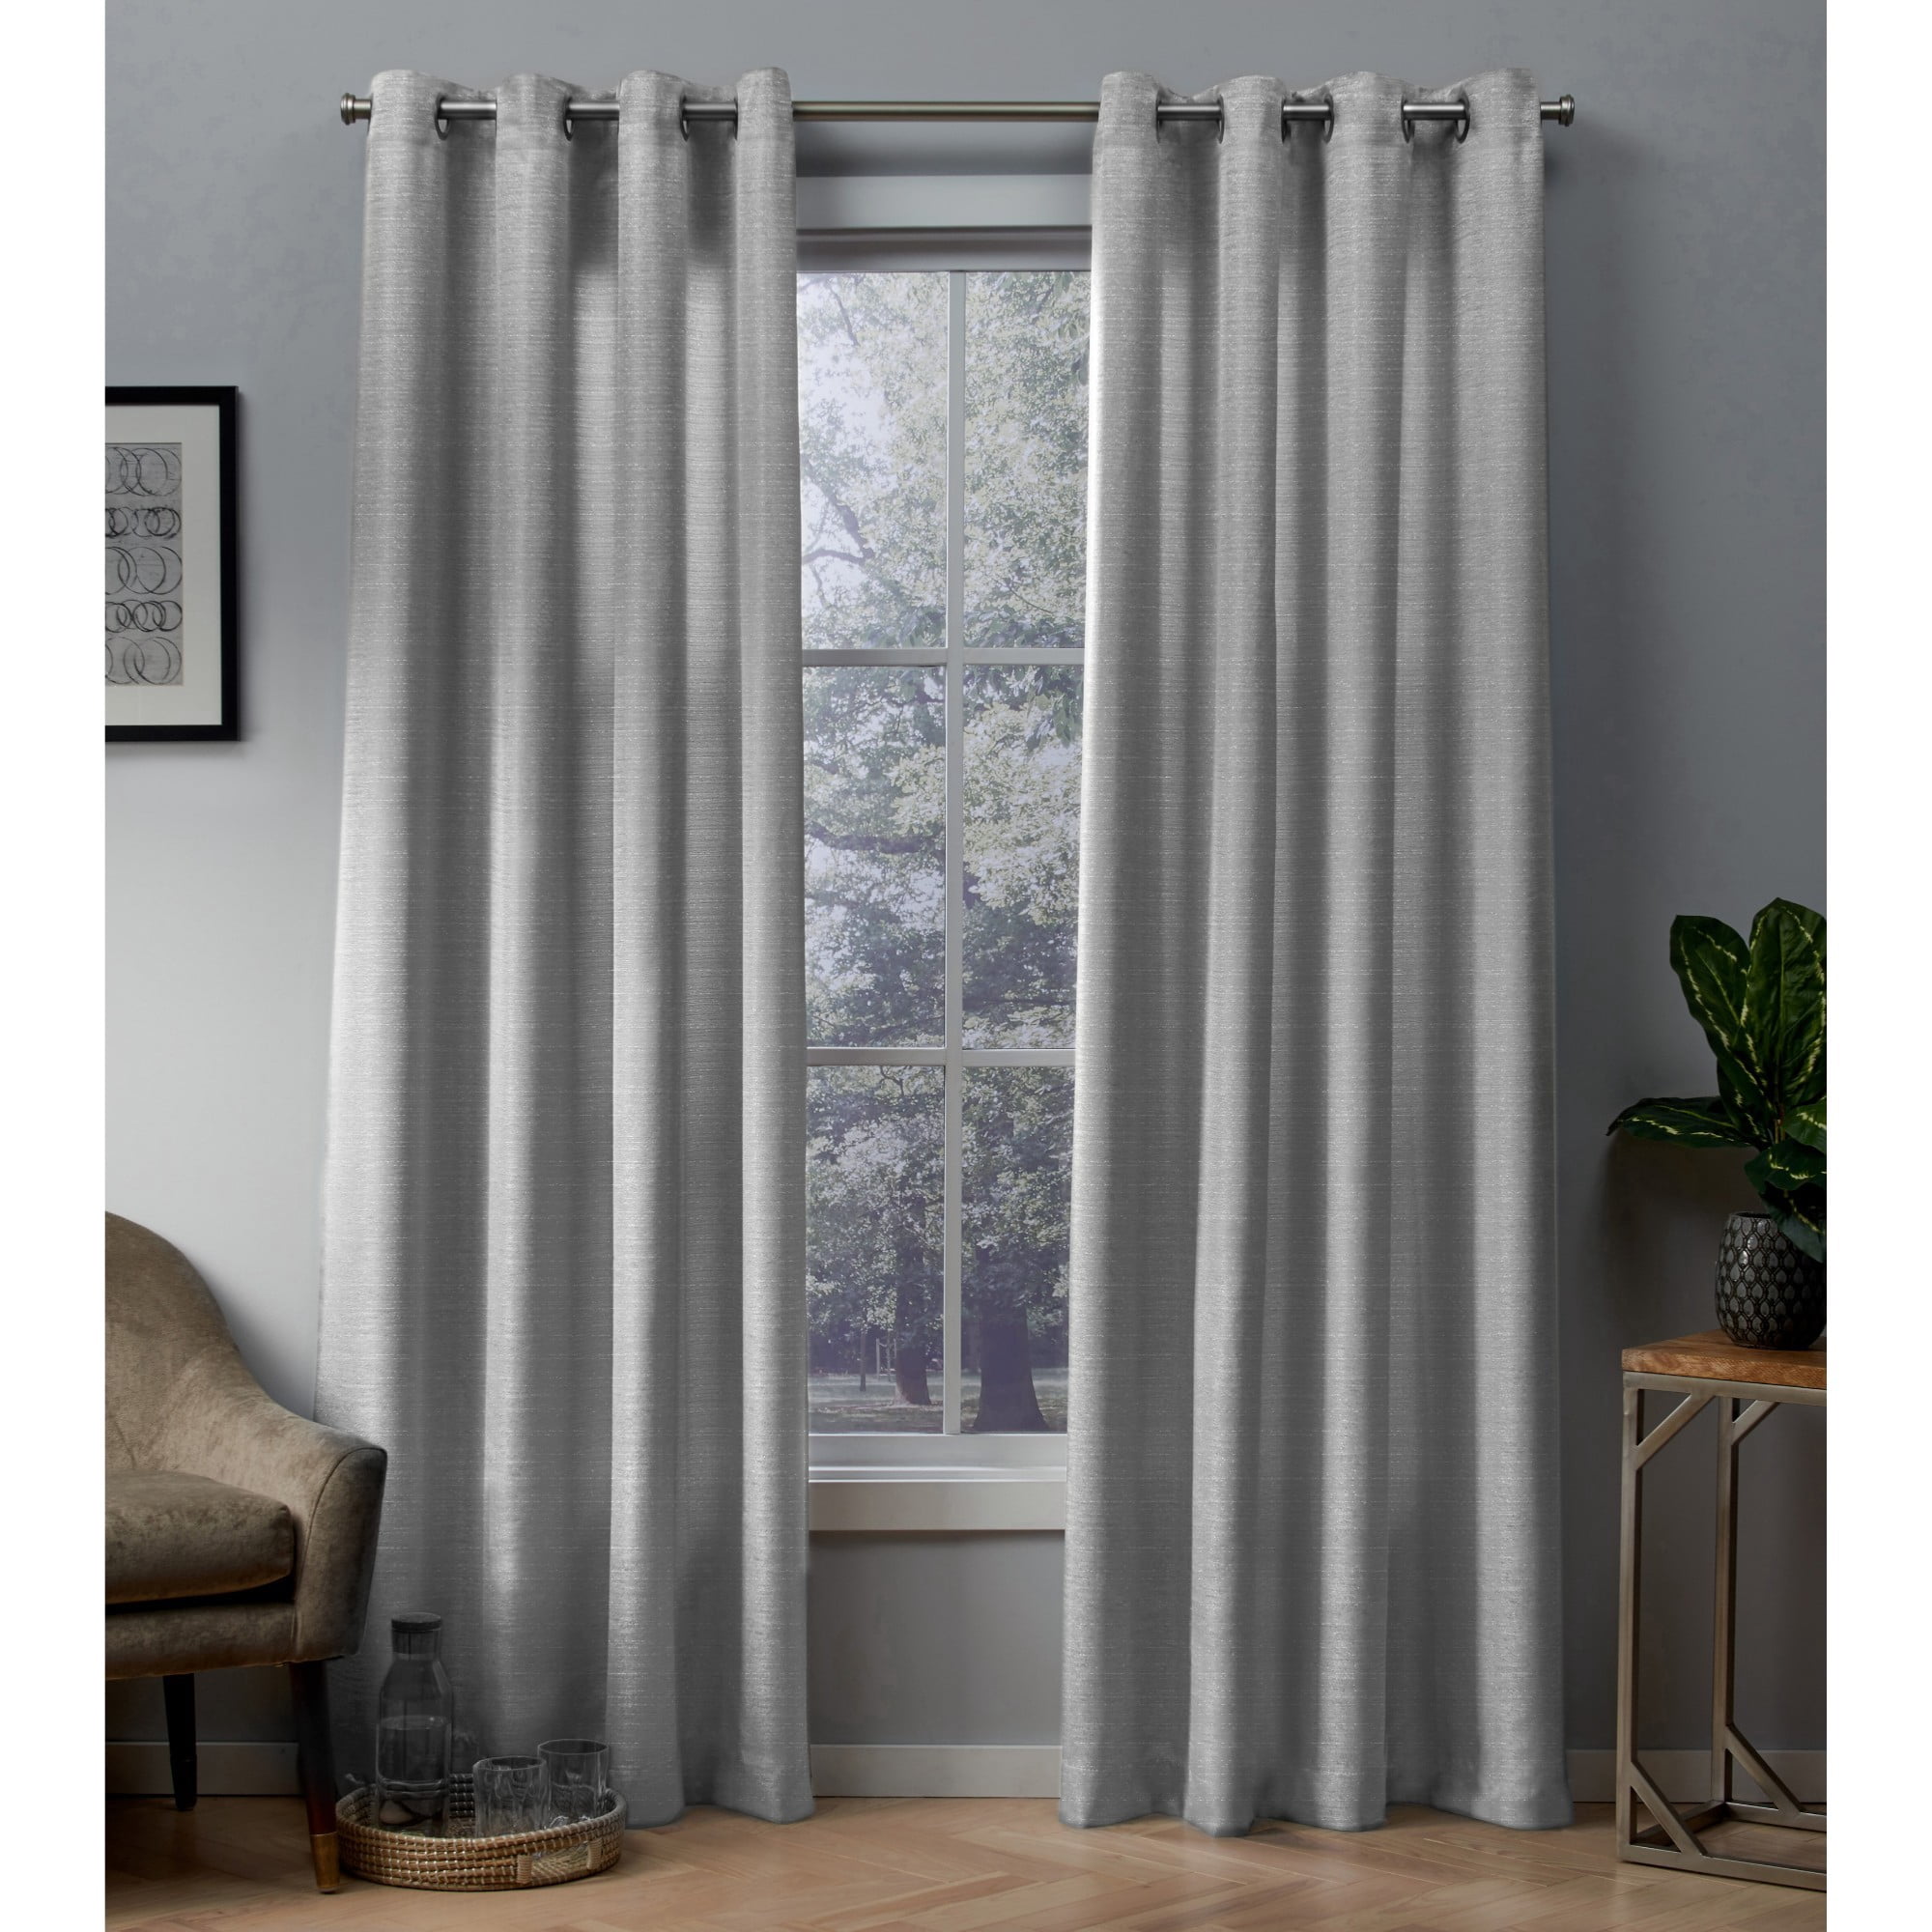 Exclusive Home Curtains 2 Pack Whitby Metallic Slub Yarn Textured Silk Look Grommet Top Curtain Panels Walmartcom Walmartcom